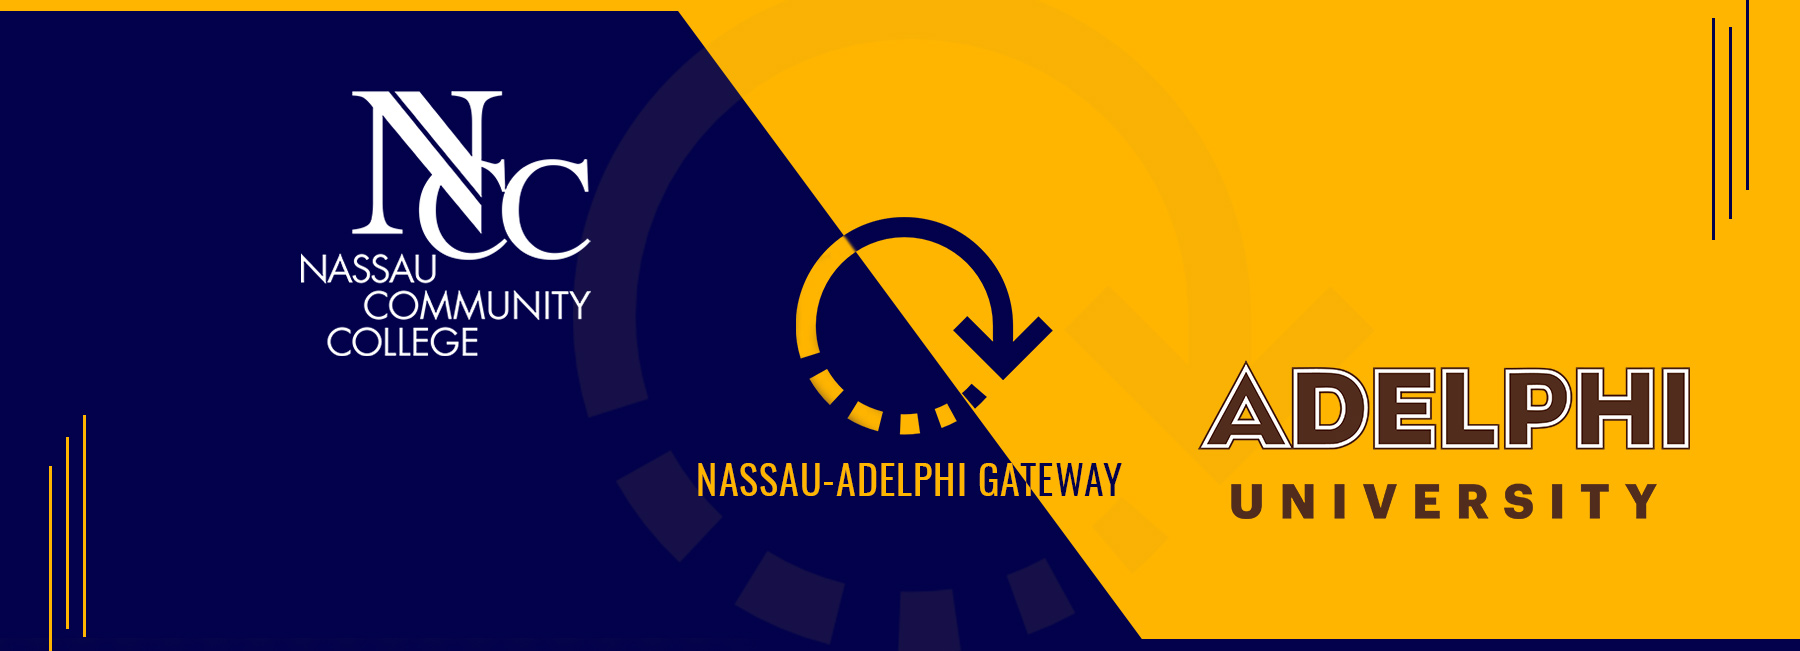 Nassau-Adelphi Gateway